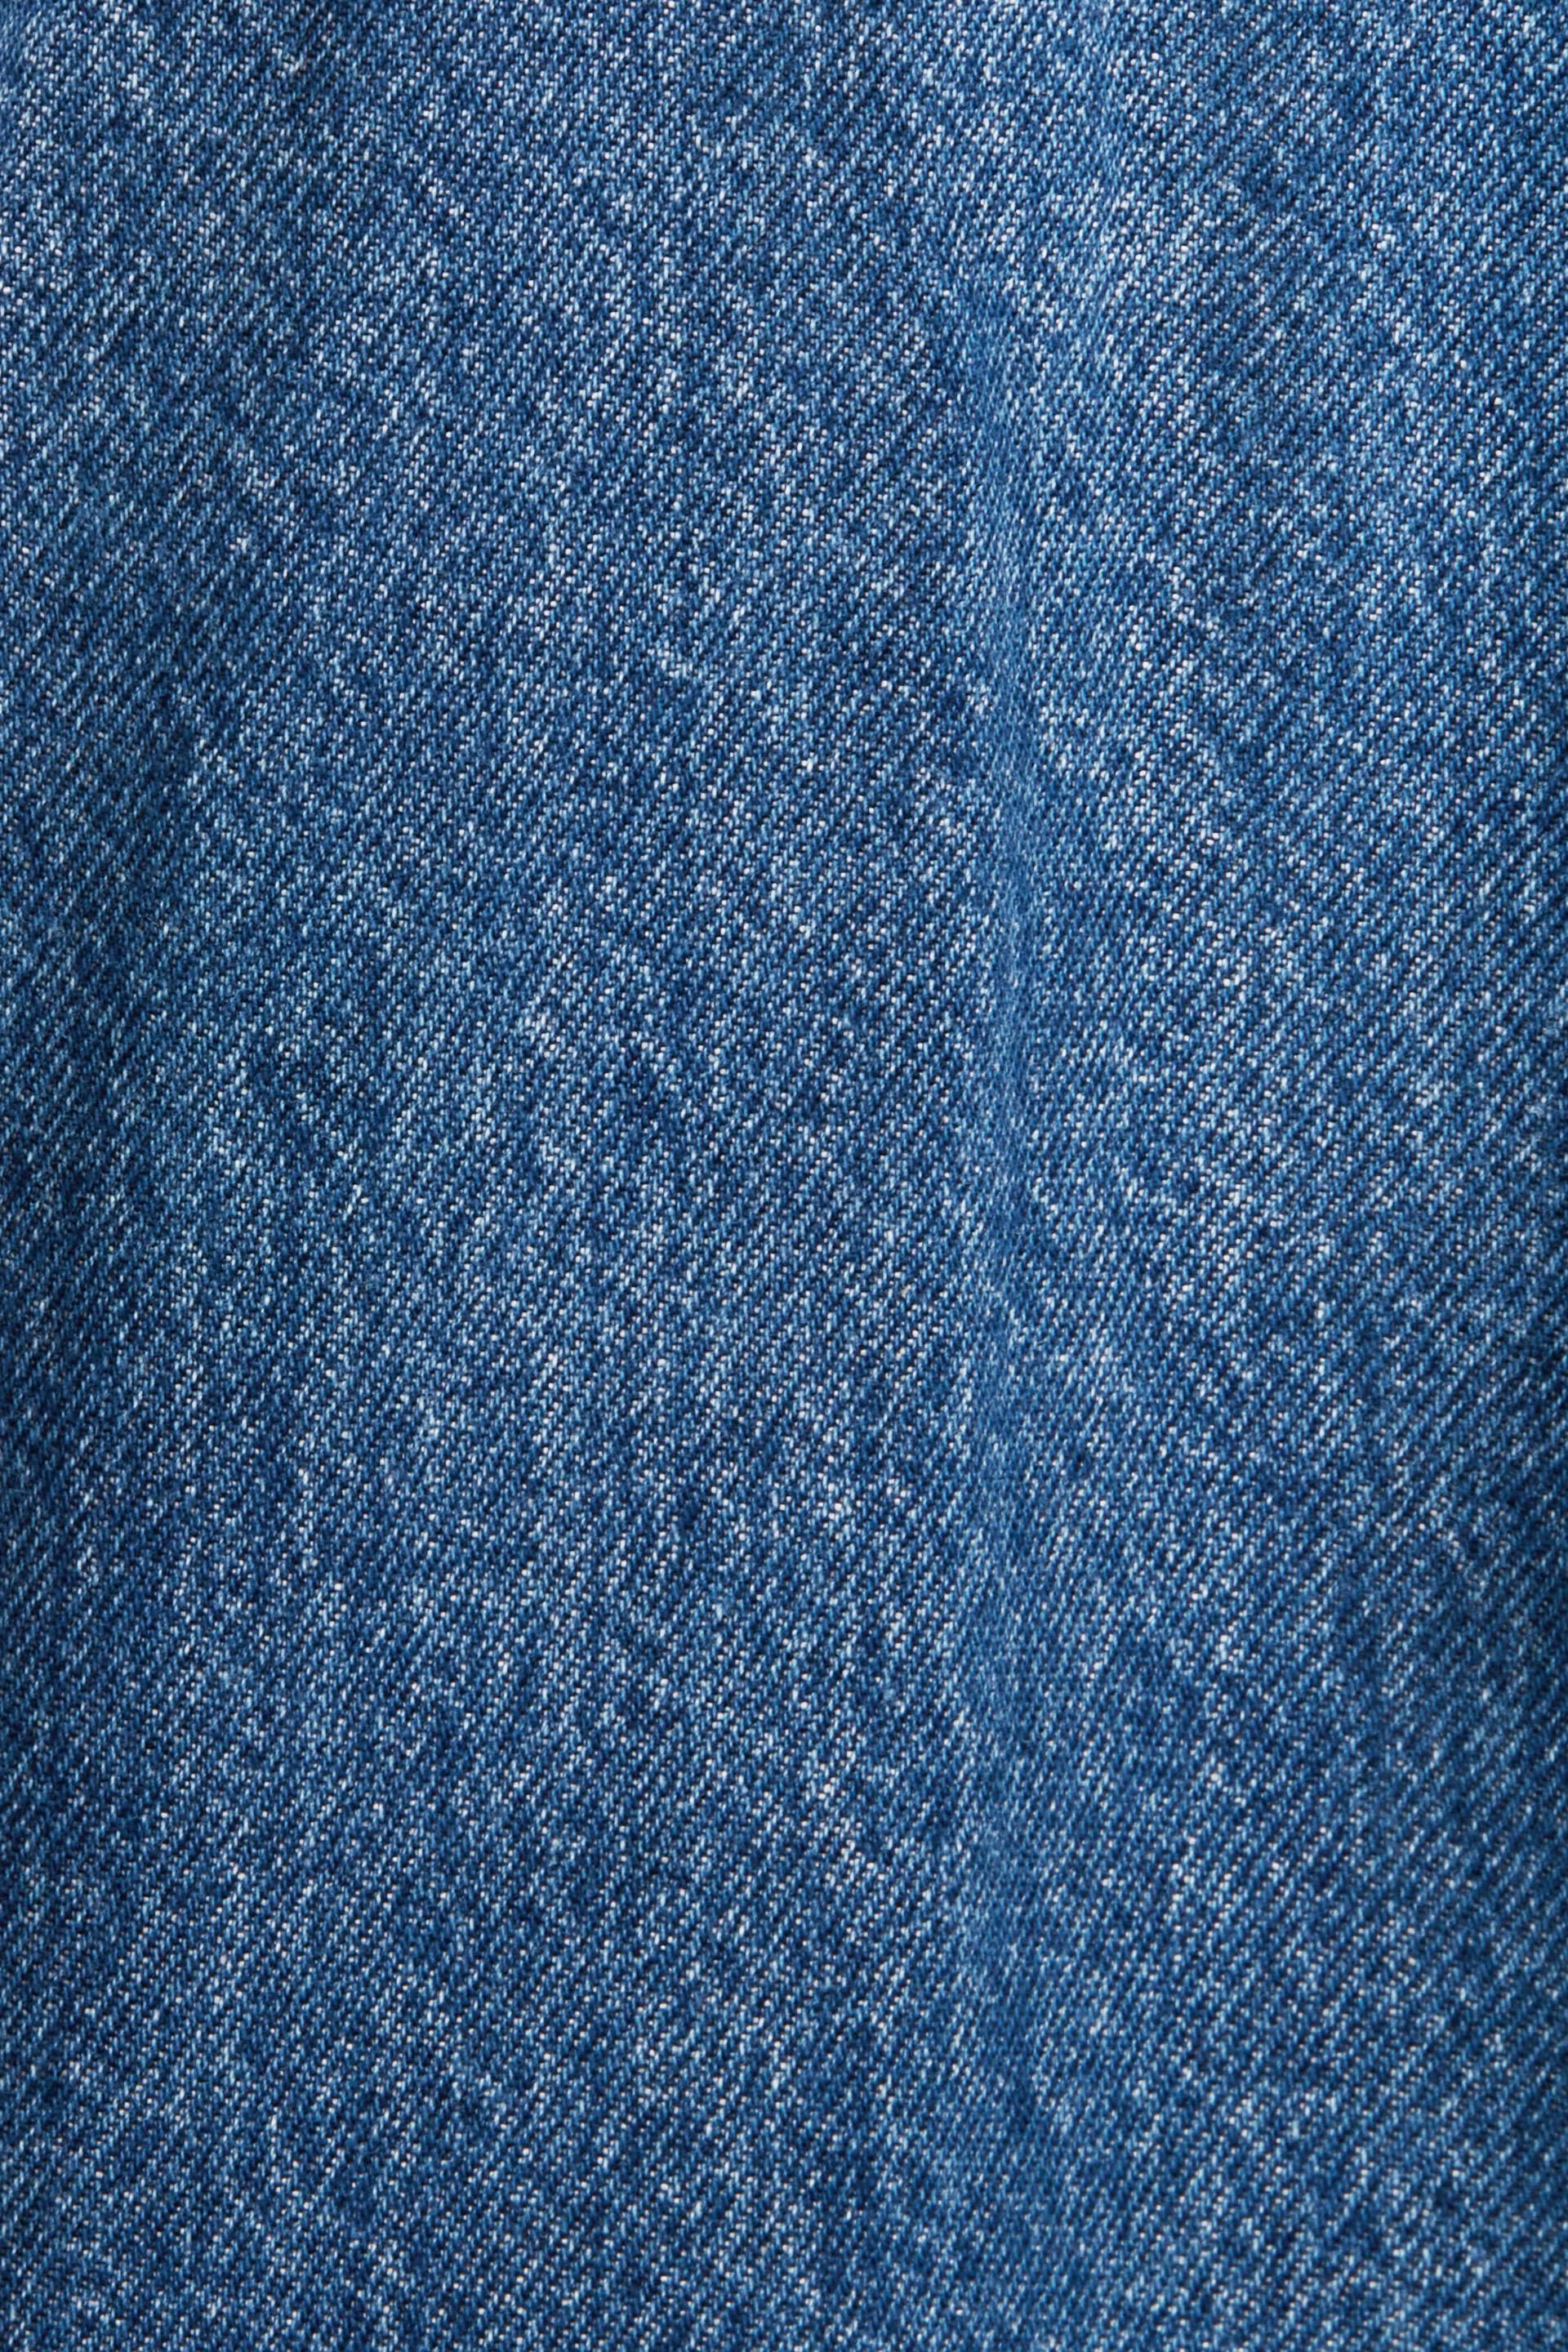 340g 100% Cotton Jean Fabric Medium Thick Twill Elastic Free 10s Cotton  Denim Fabric - China Denim and Cotton Denim price | Made-in-China.com